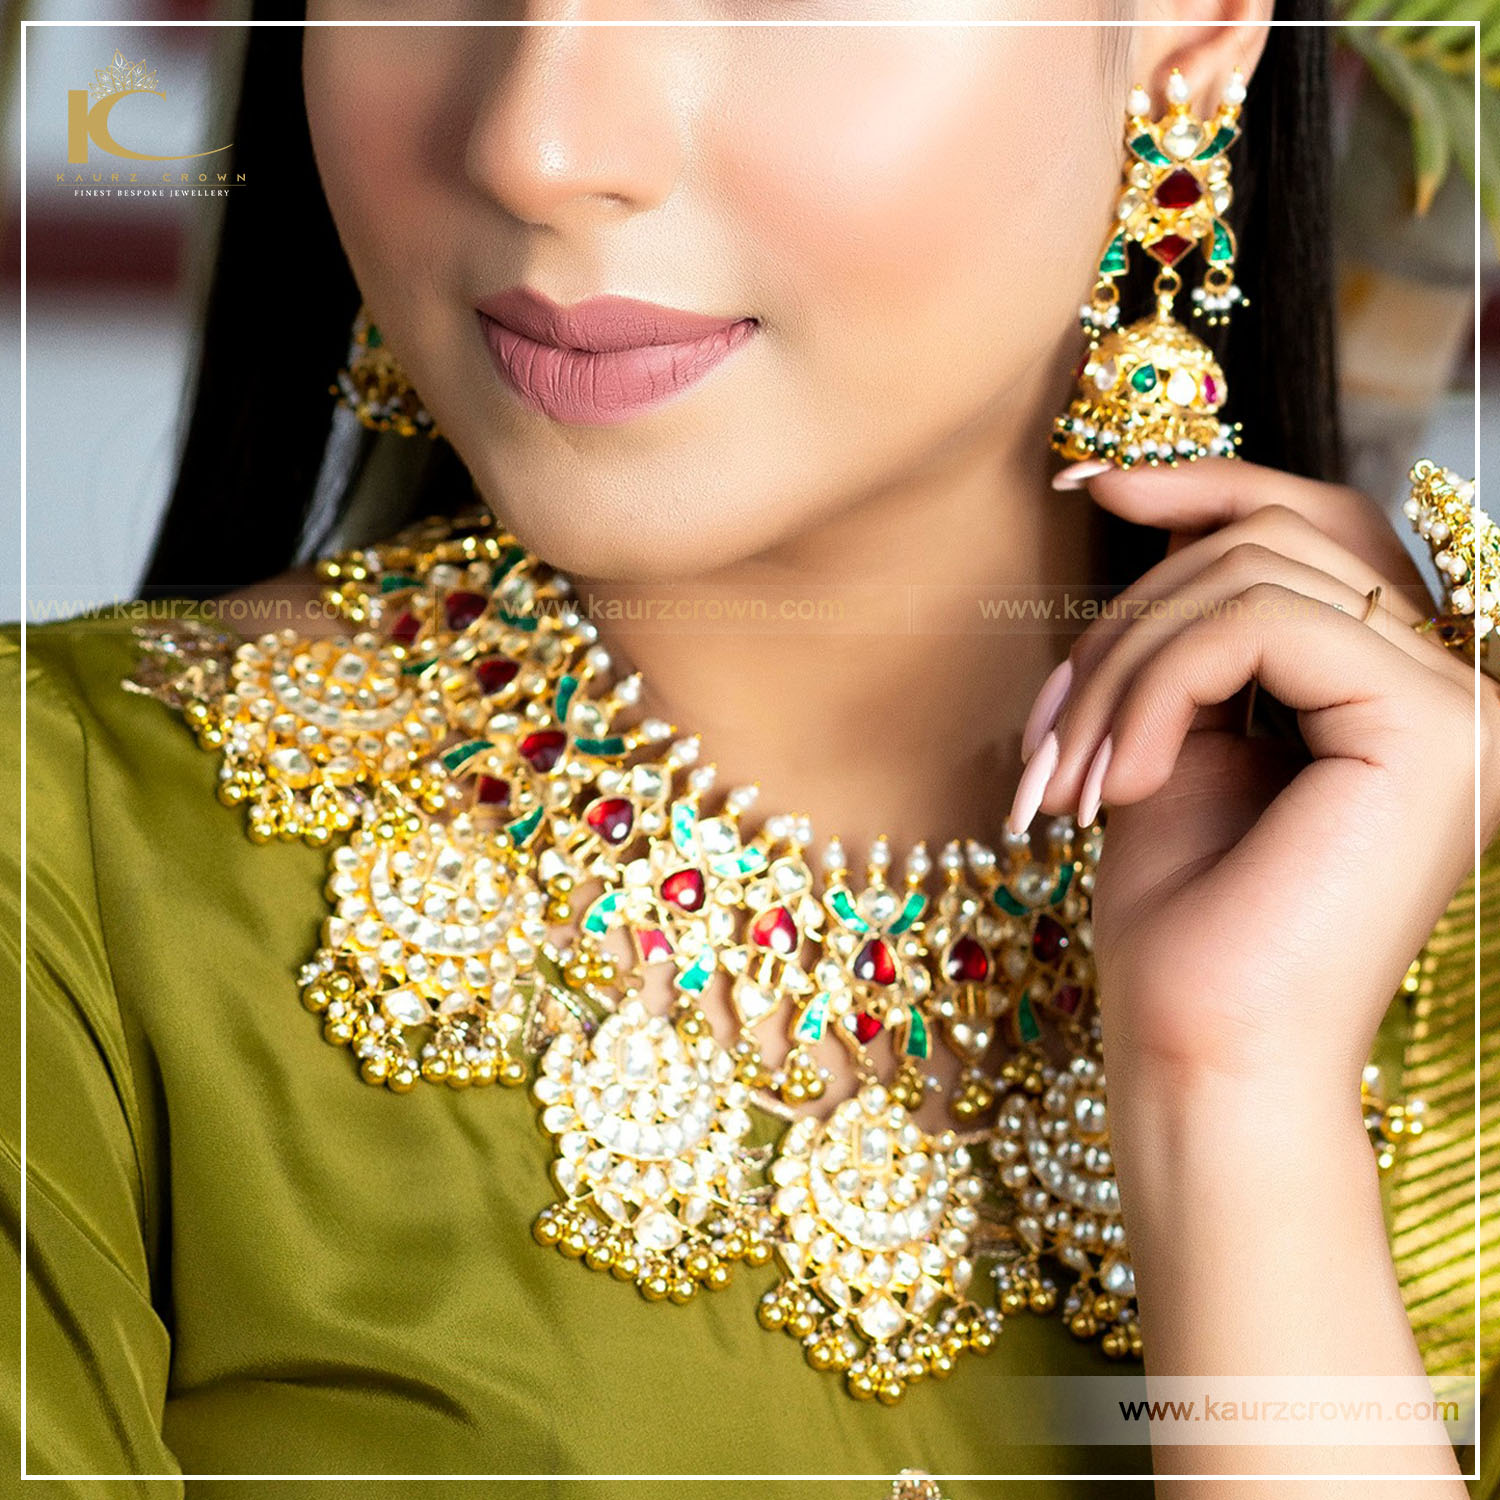 Noorjahan necklace set , kaurz crown jewellery , online jwellery shop , punjabi jewellery shop , tikka , earrings , gold plated jewellery